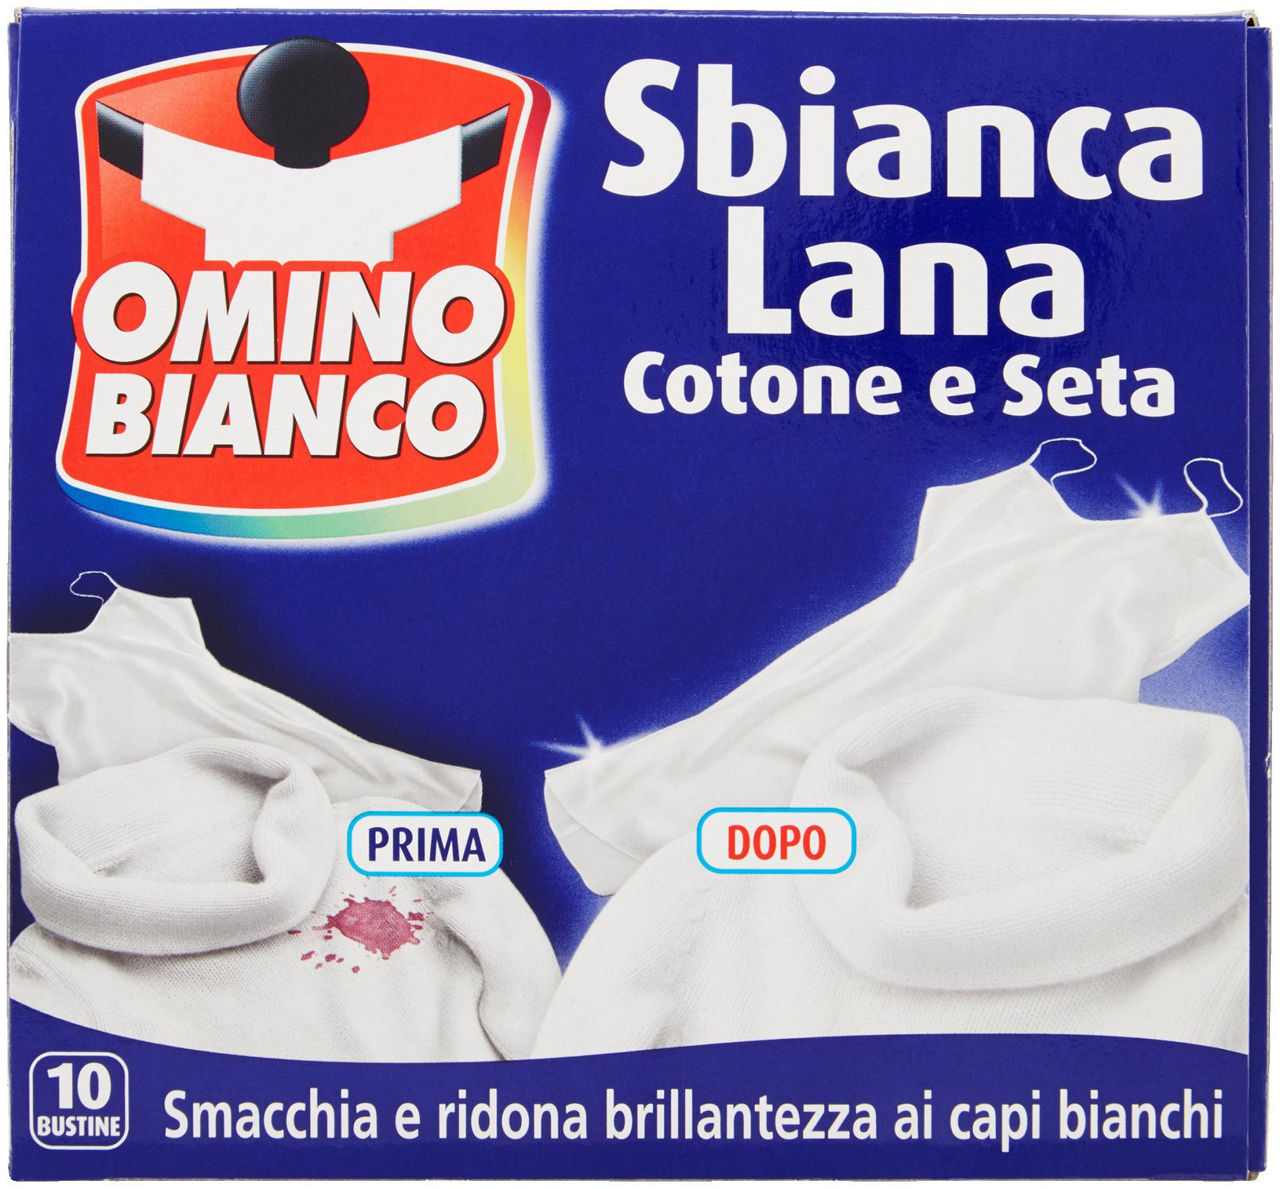 SBIANCANTE OMINO BIANCO SBIANCALANA 10 BUSTE  SCATOLA GR 200 - 0